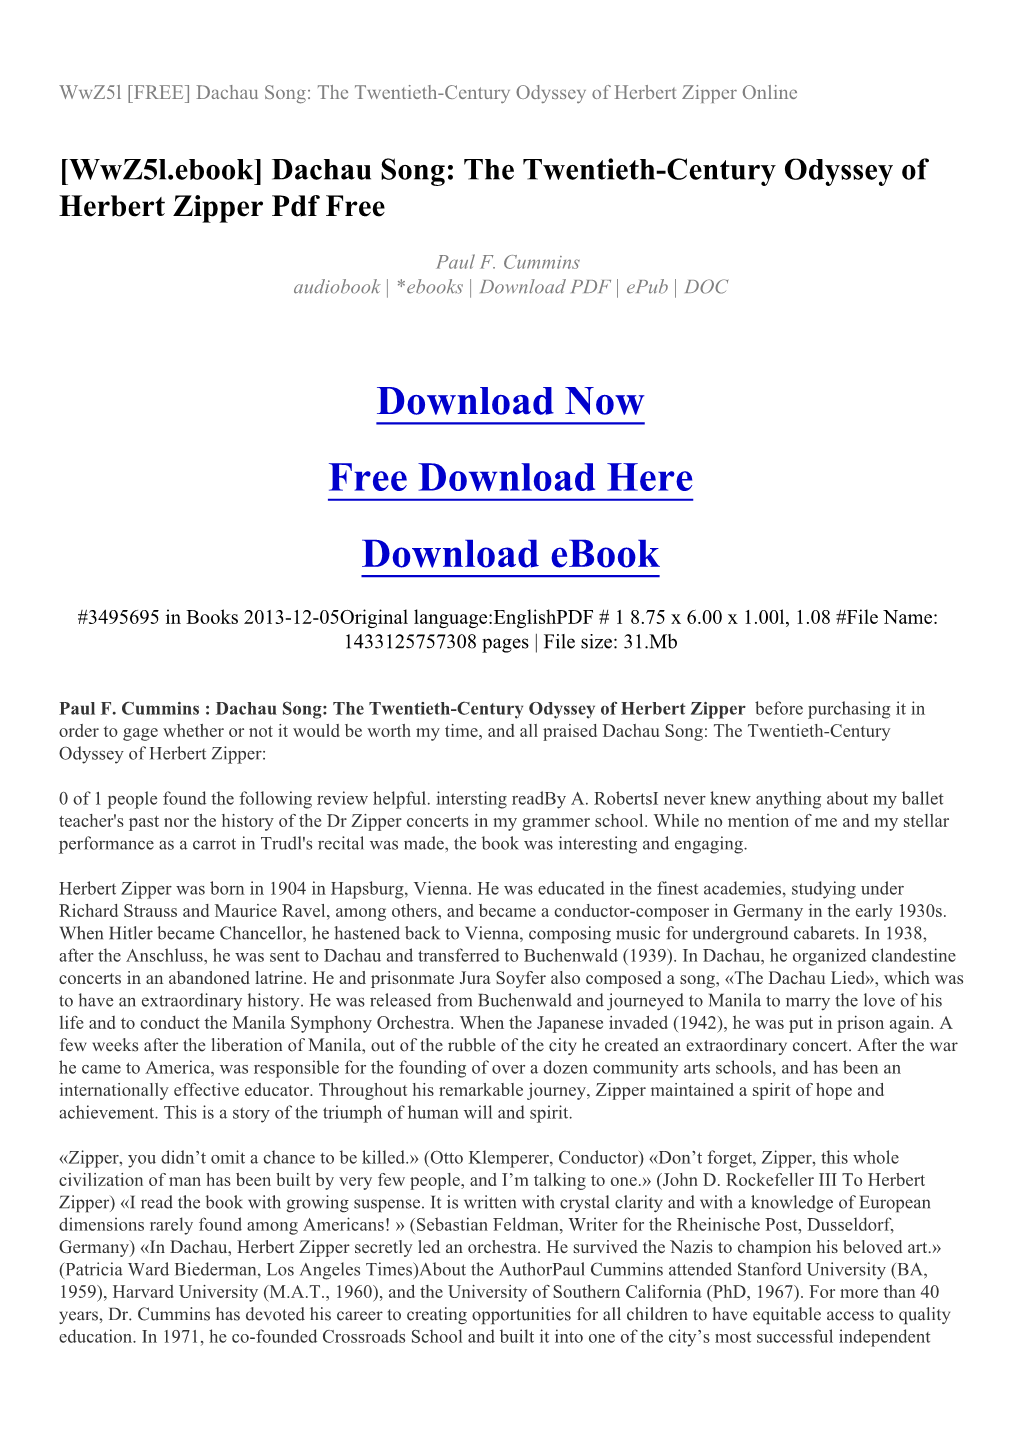 Dachau Song: the Twentieth-Century Odyssey of Herbert Zipper Online